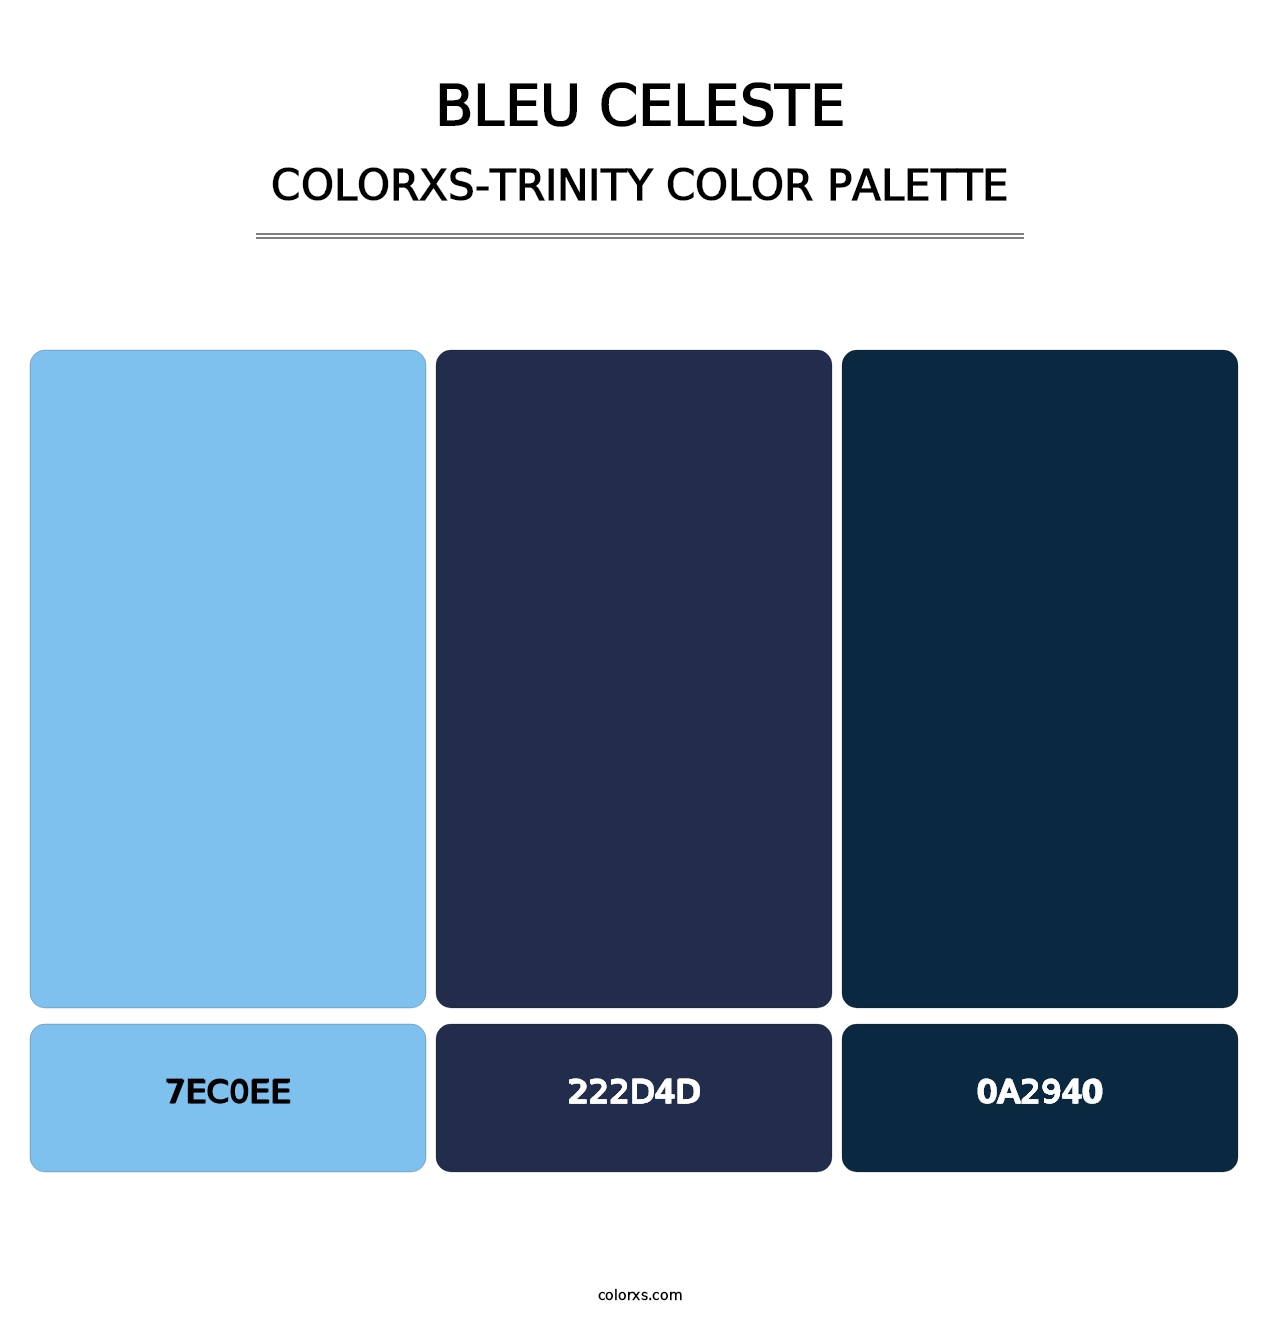 Bleu Celeste - Colorxs Trinity Palette